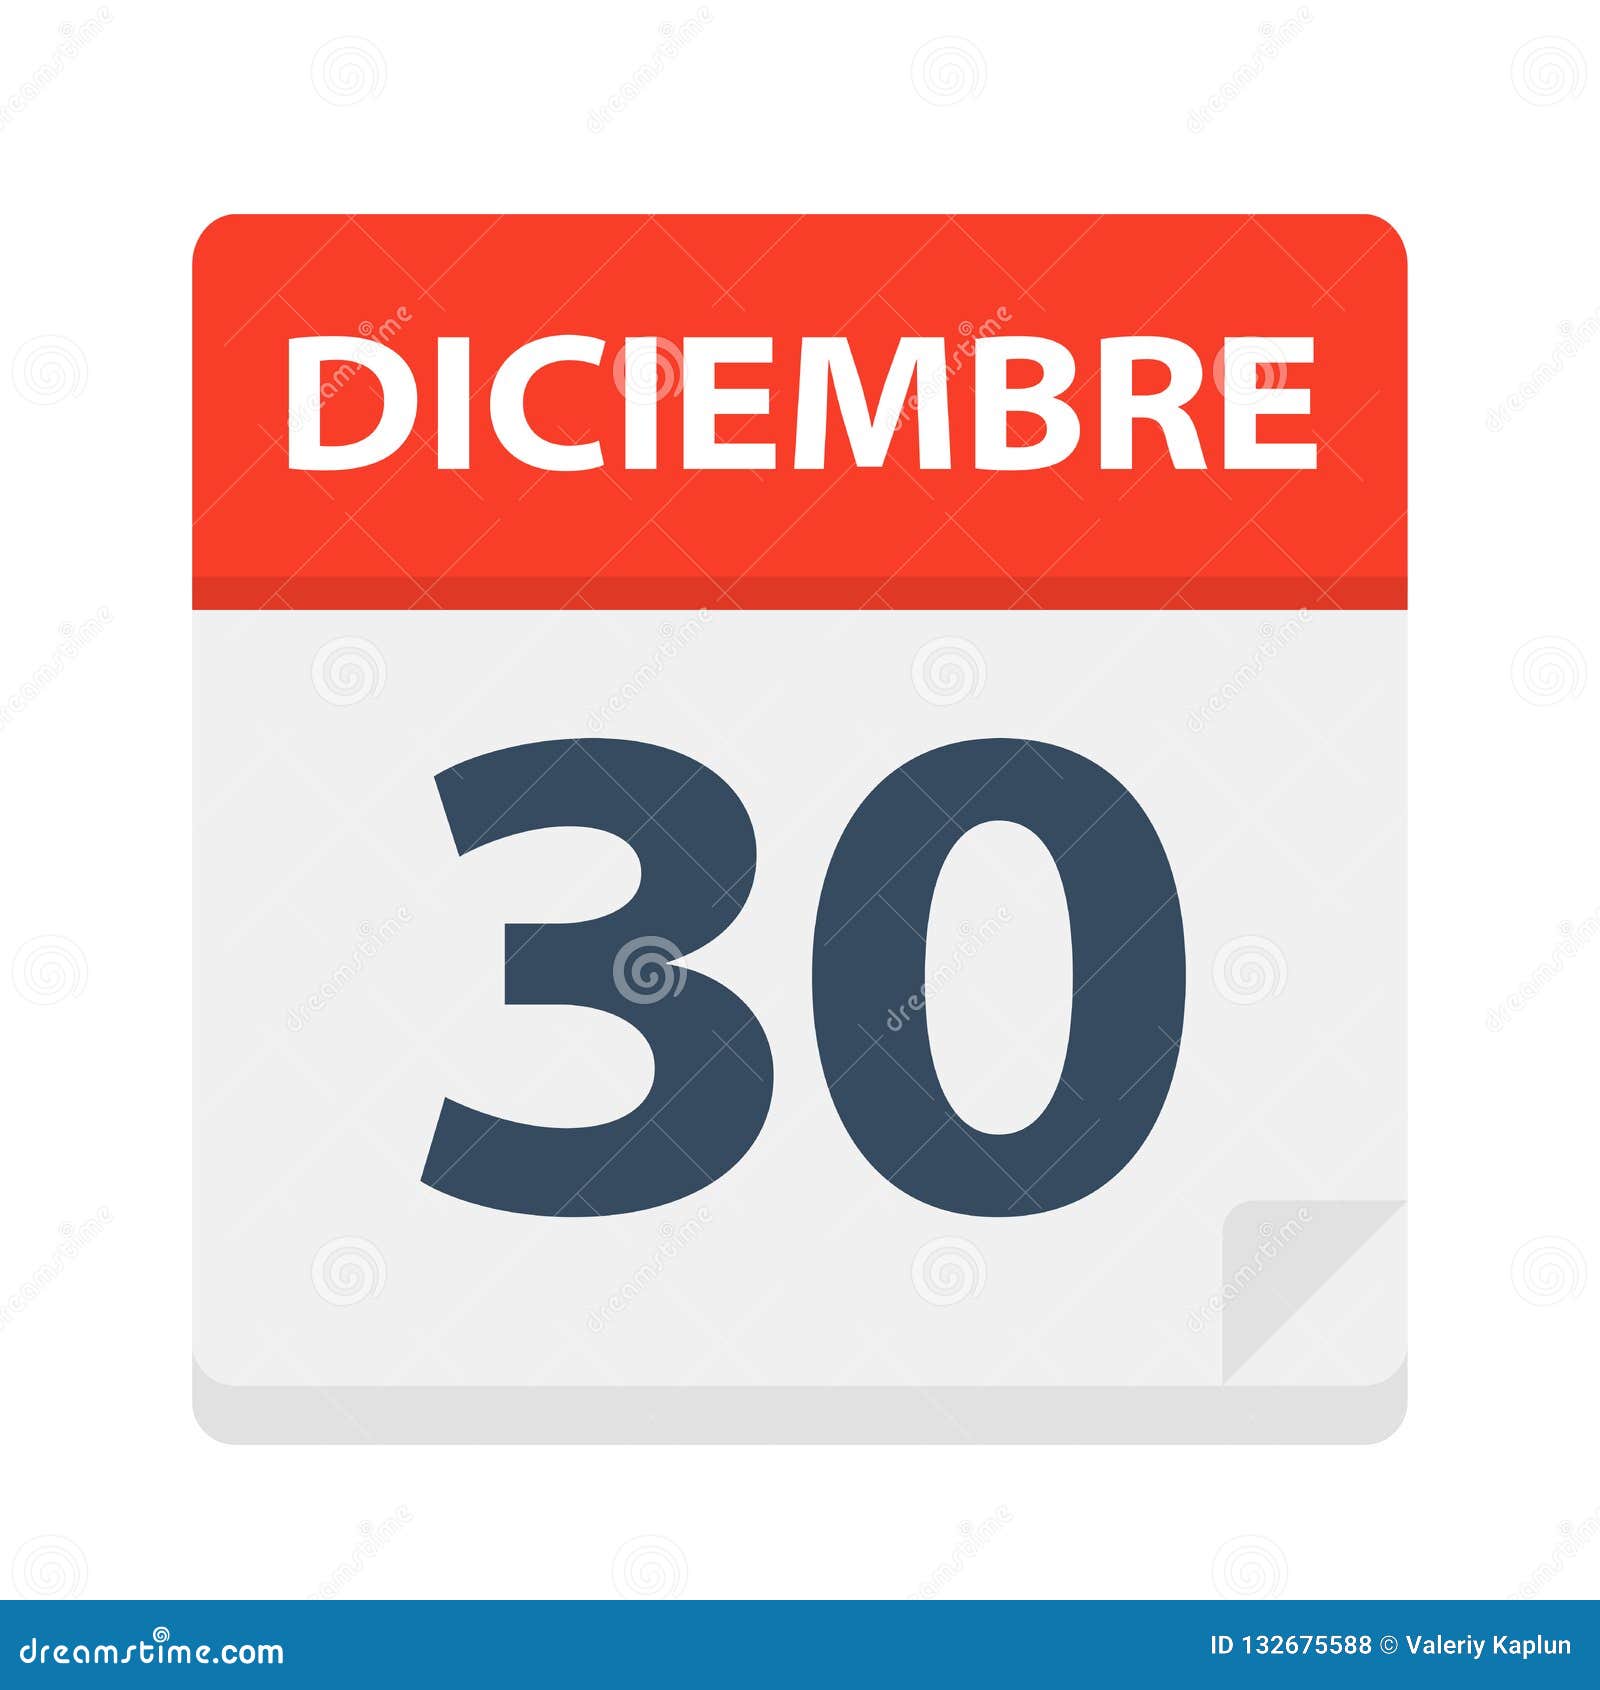 diciembre 30 - calendar icon - december 30.   of spanish calendar leaf